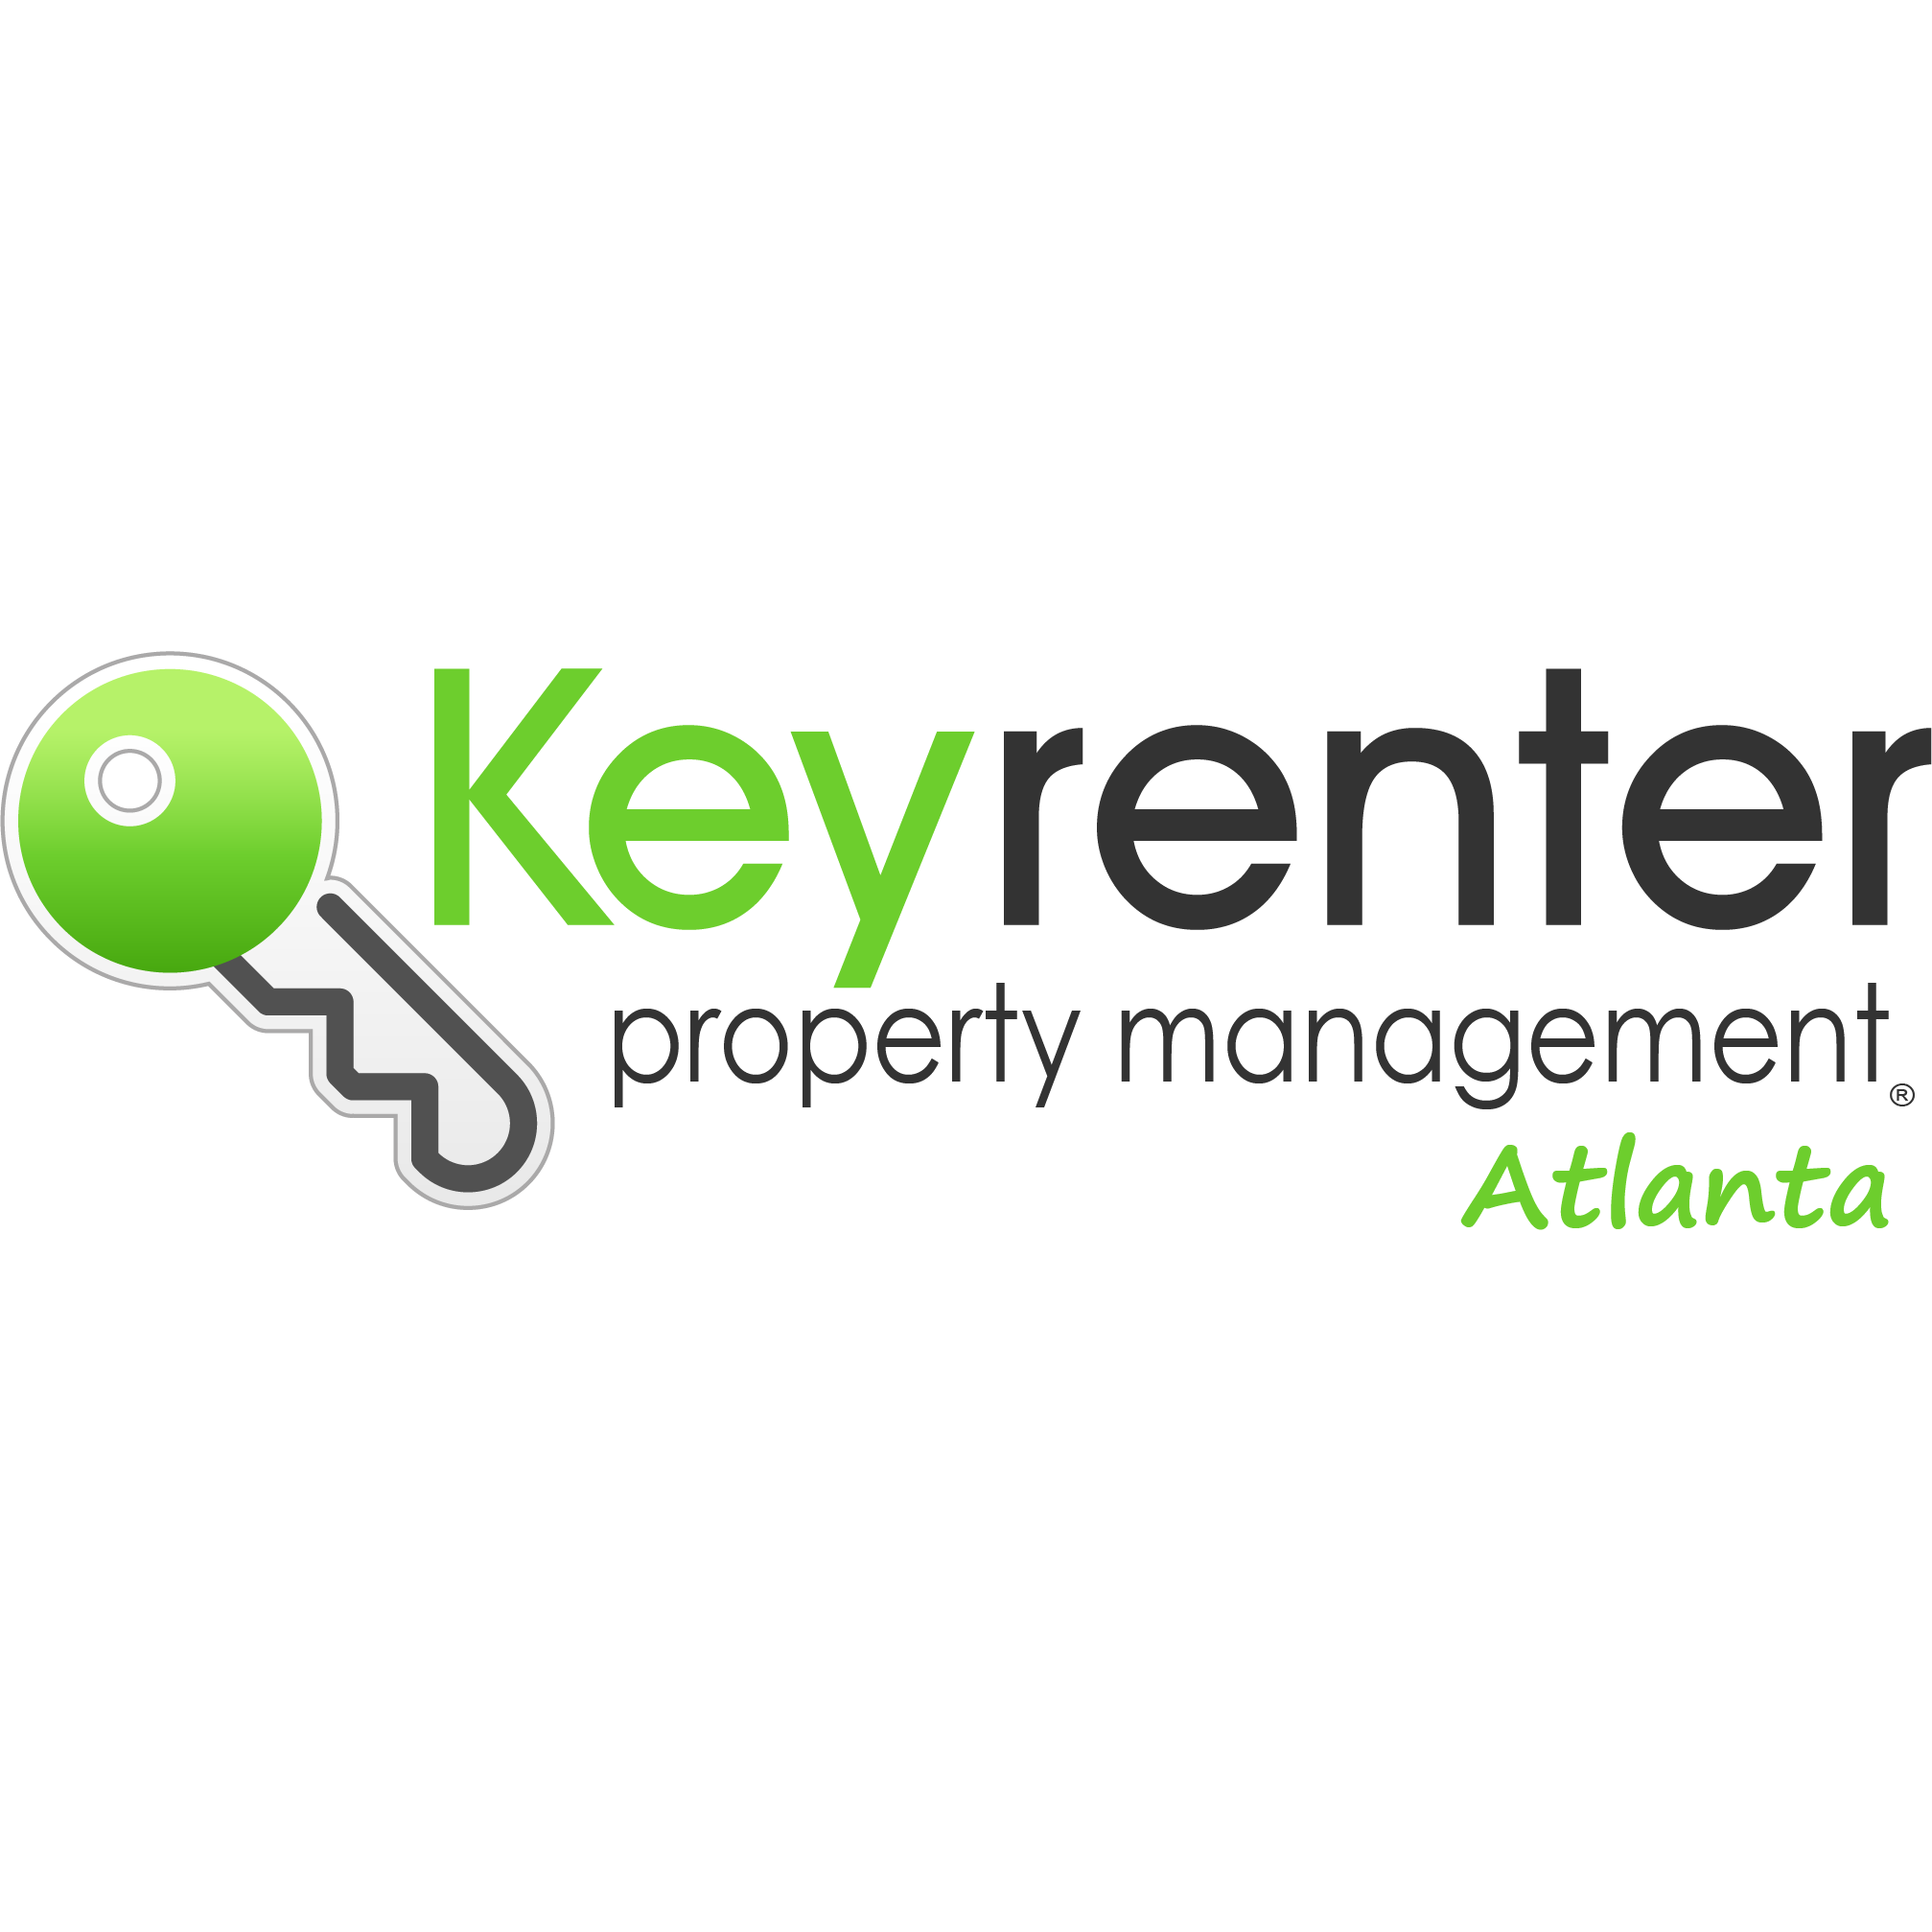 Keyrenter Property Management Atlanta Logo